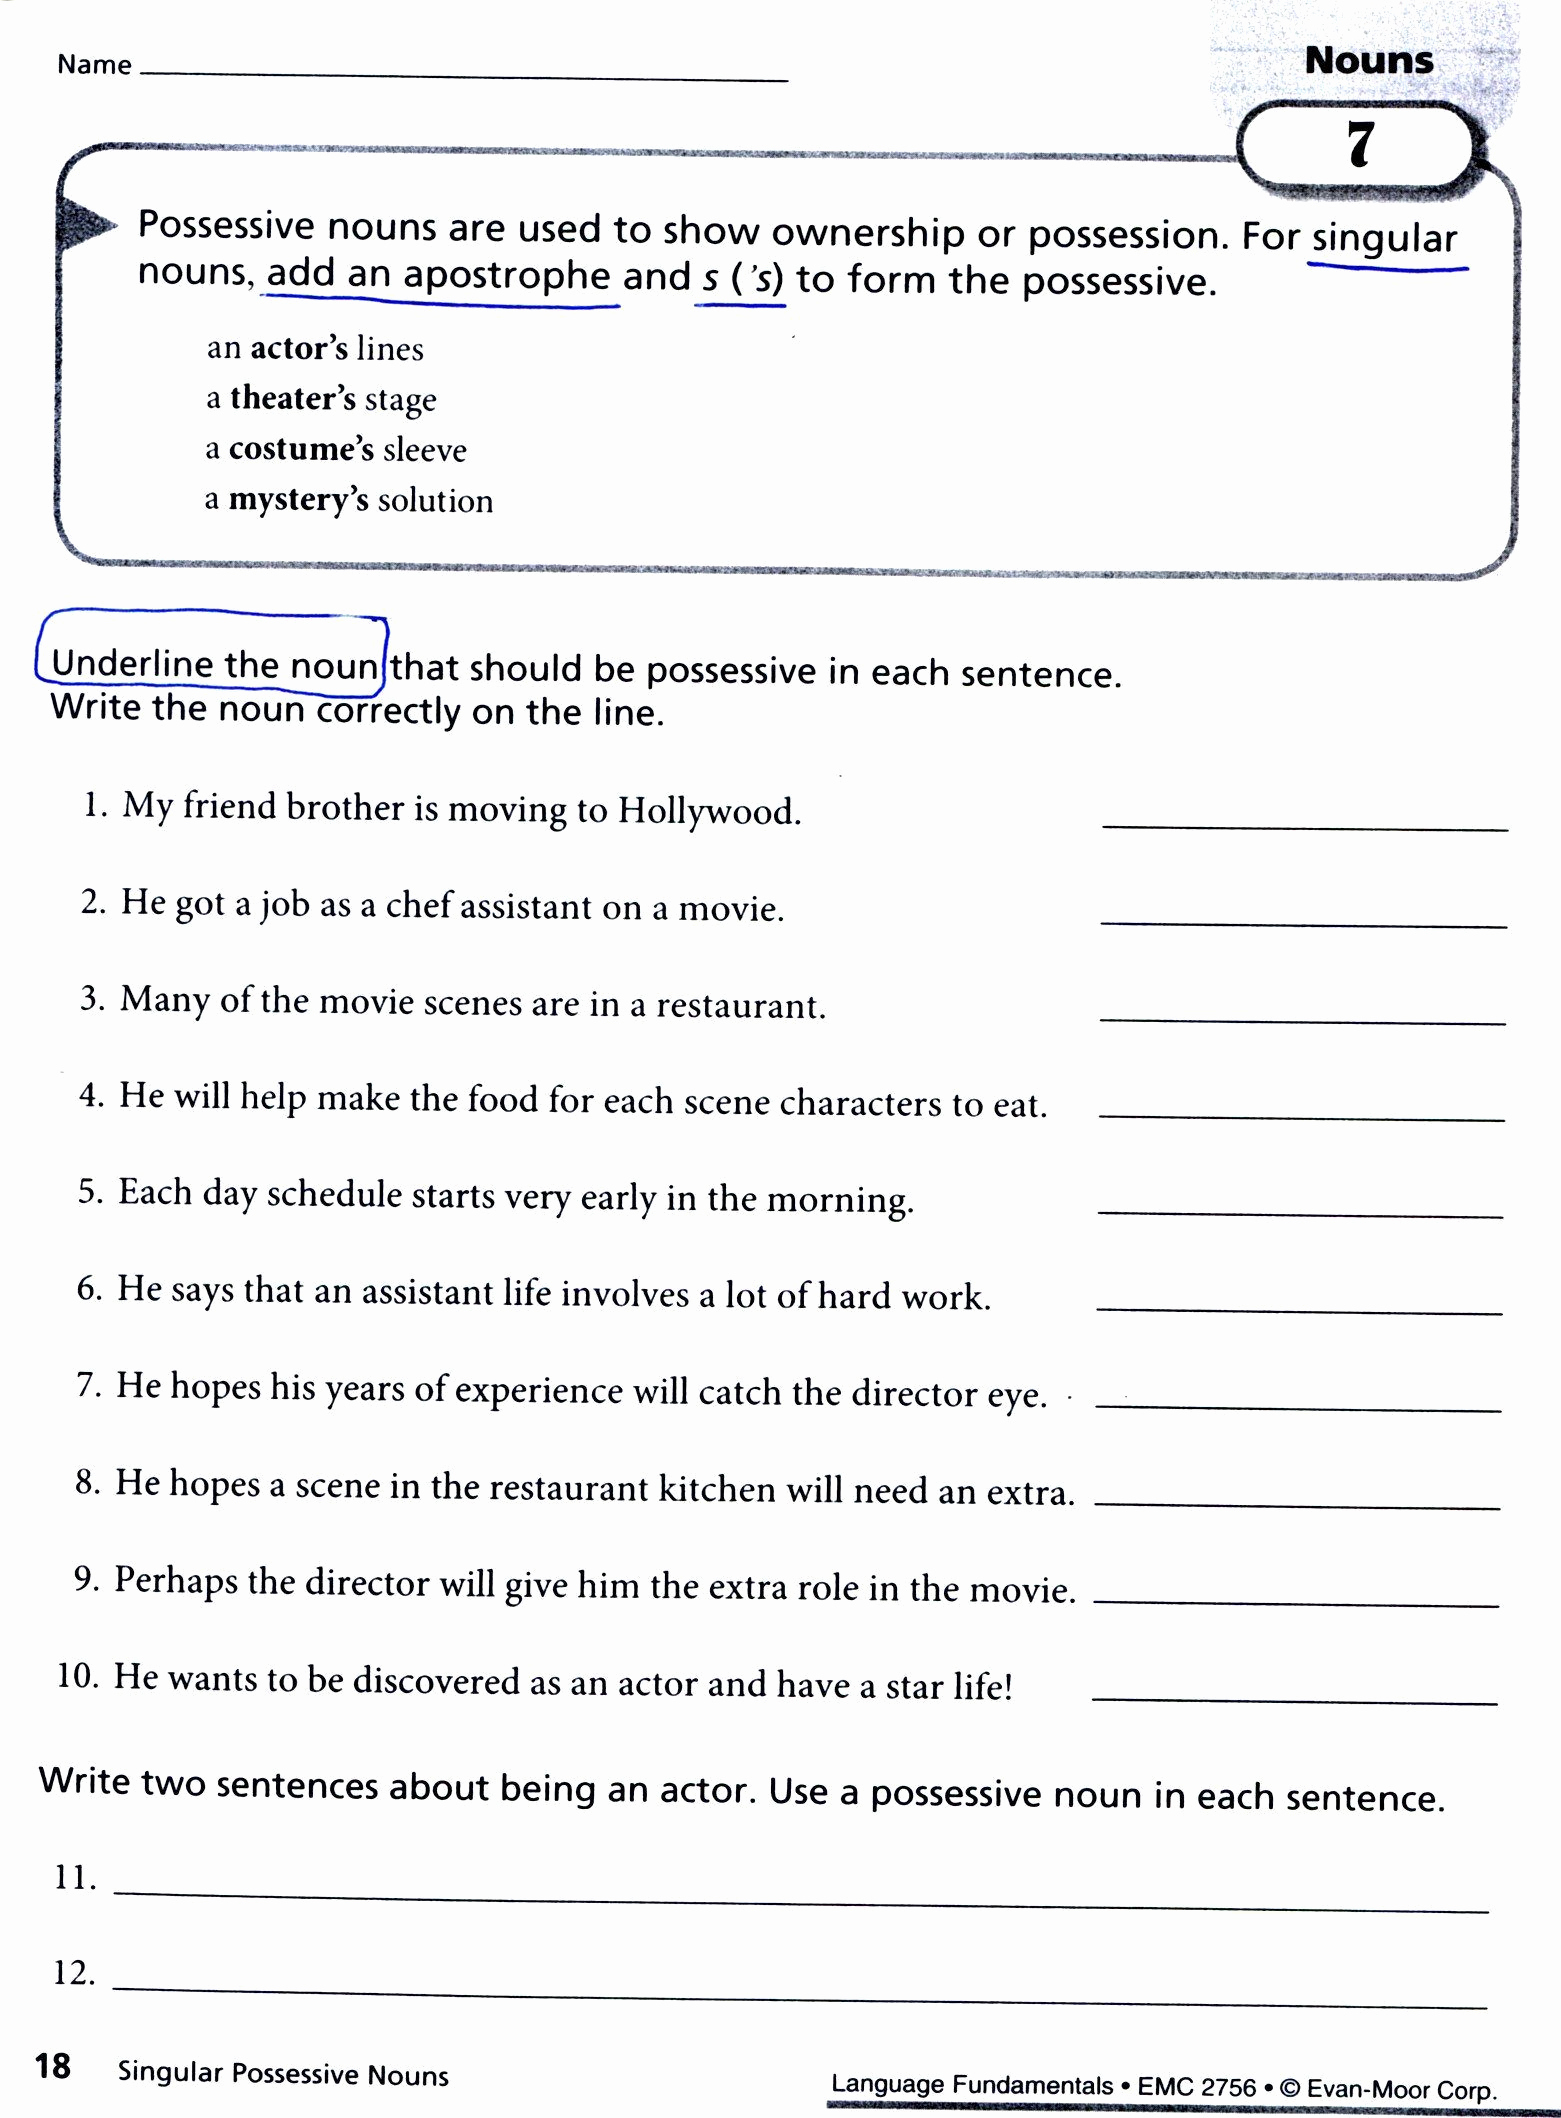 Possessive Pronouns Worksheet 5th Grade New Possessive Pronouns Worksheet 5th Grade Possessive